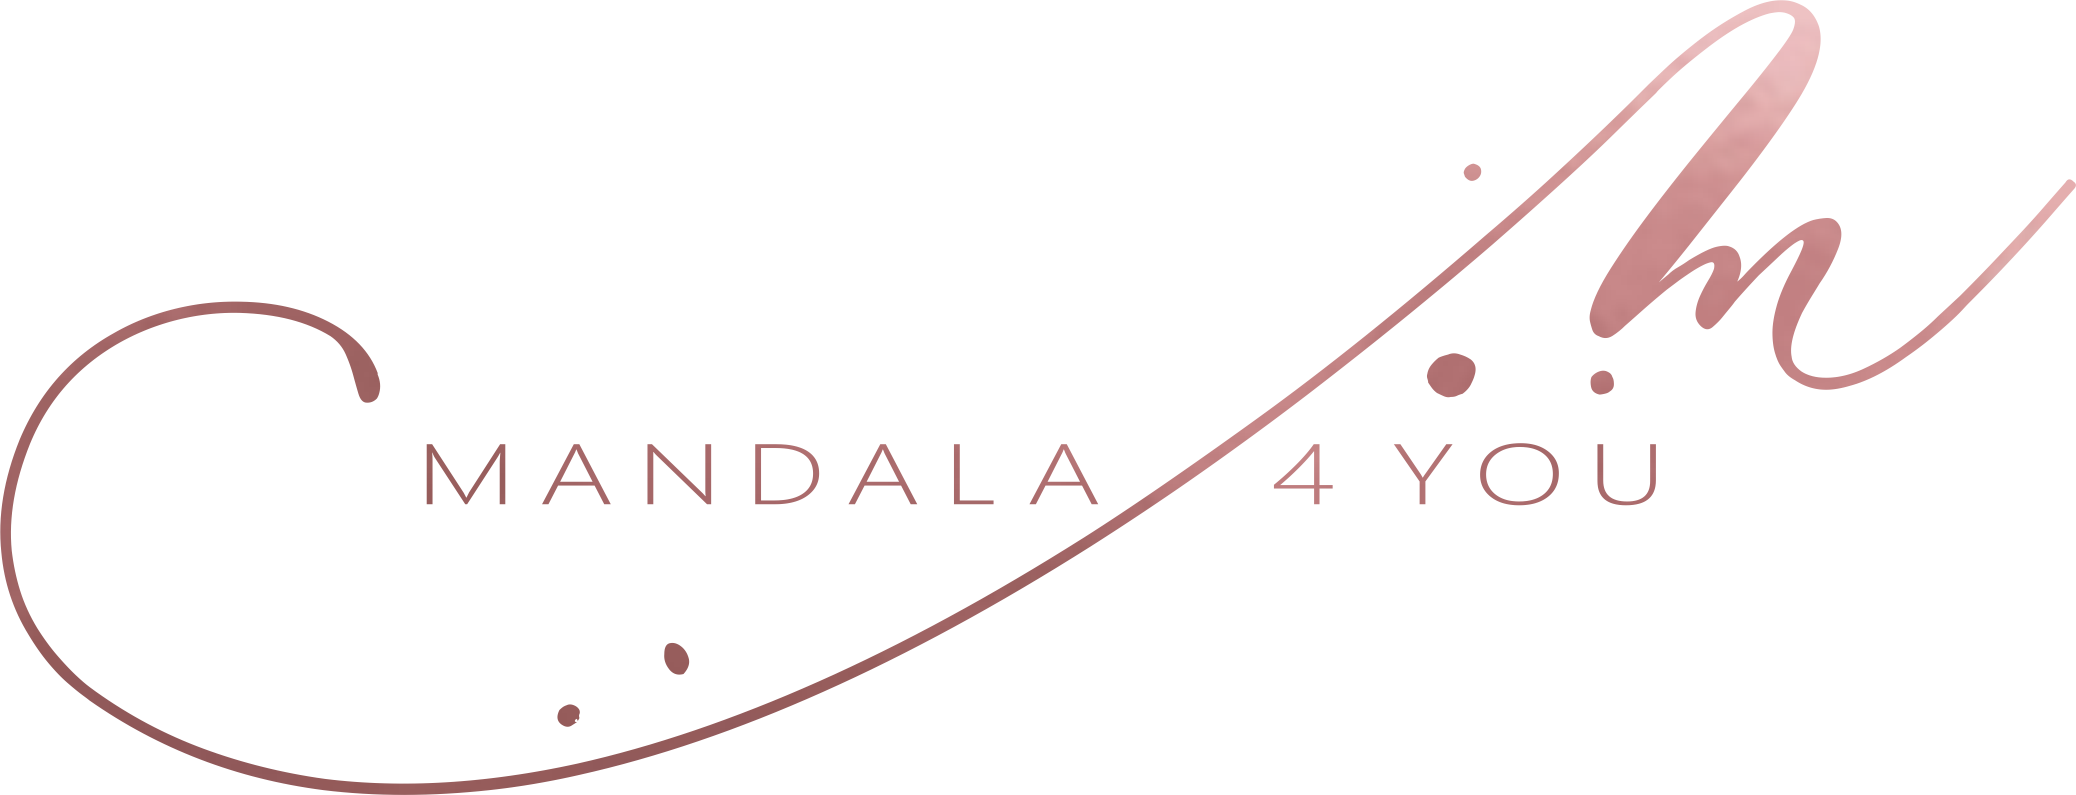 Mandala 4 you